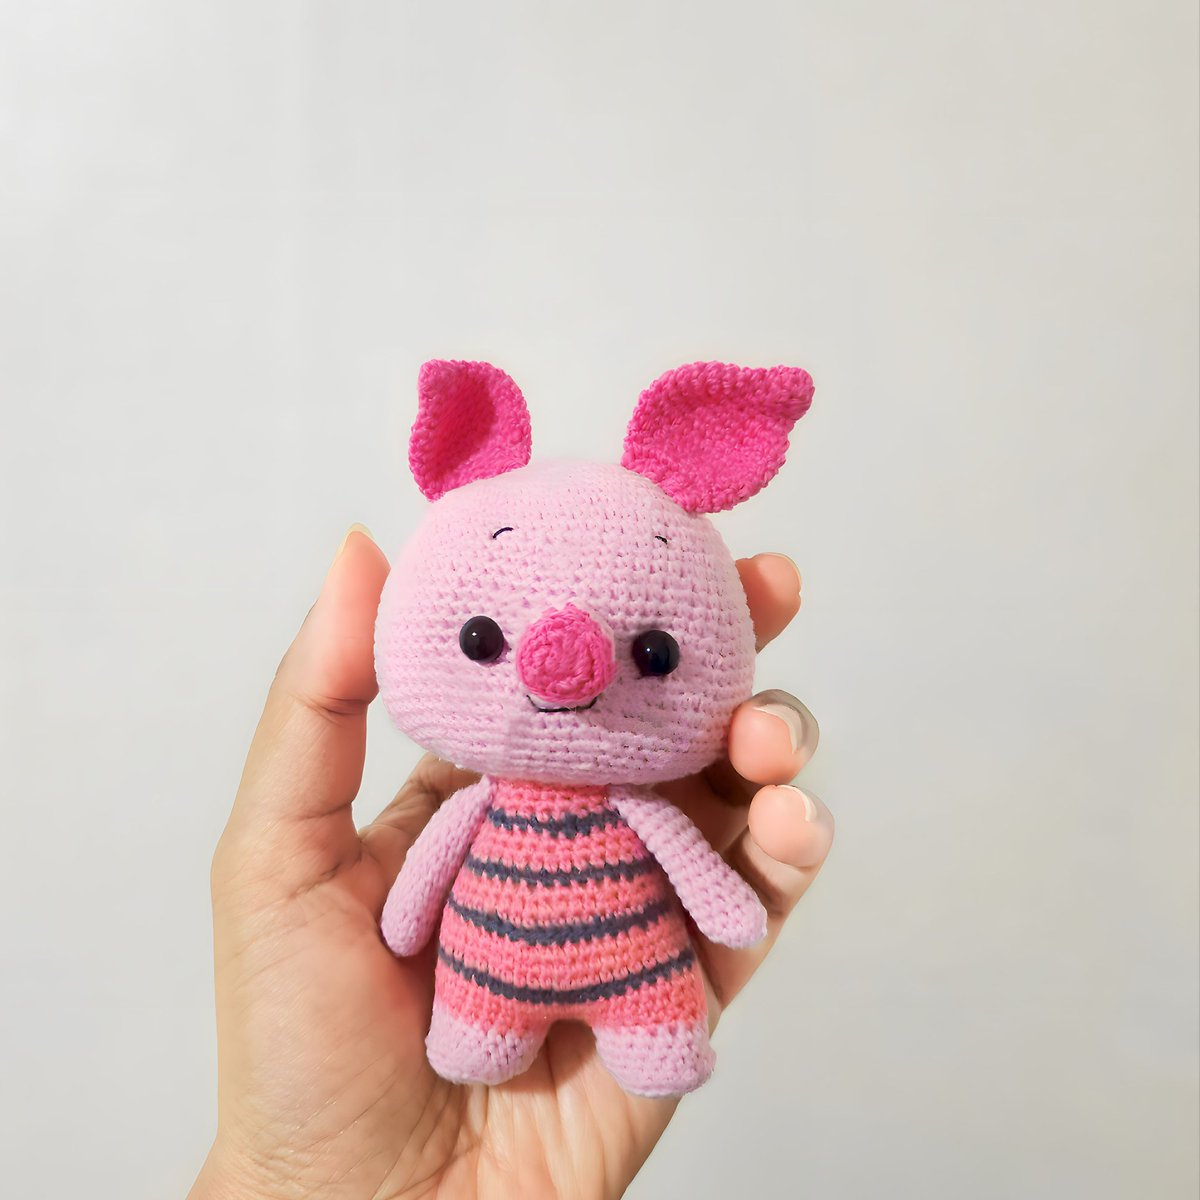 Mini piglet 🐷 ❤️ 
Special made for a friend
#piglets #winniethepooh #crochetpattern #crochet #knittingtwitter #KnittingPattern #knittingtopia #TikTokviral